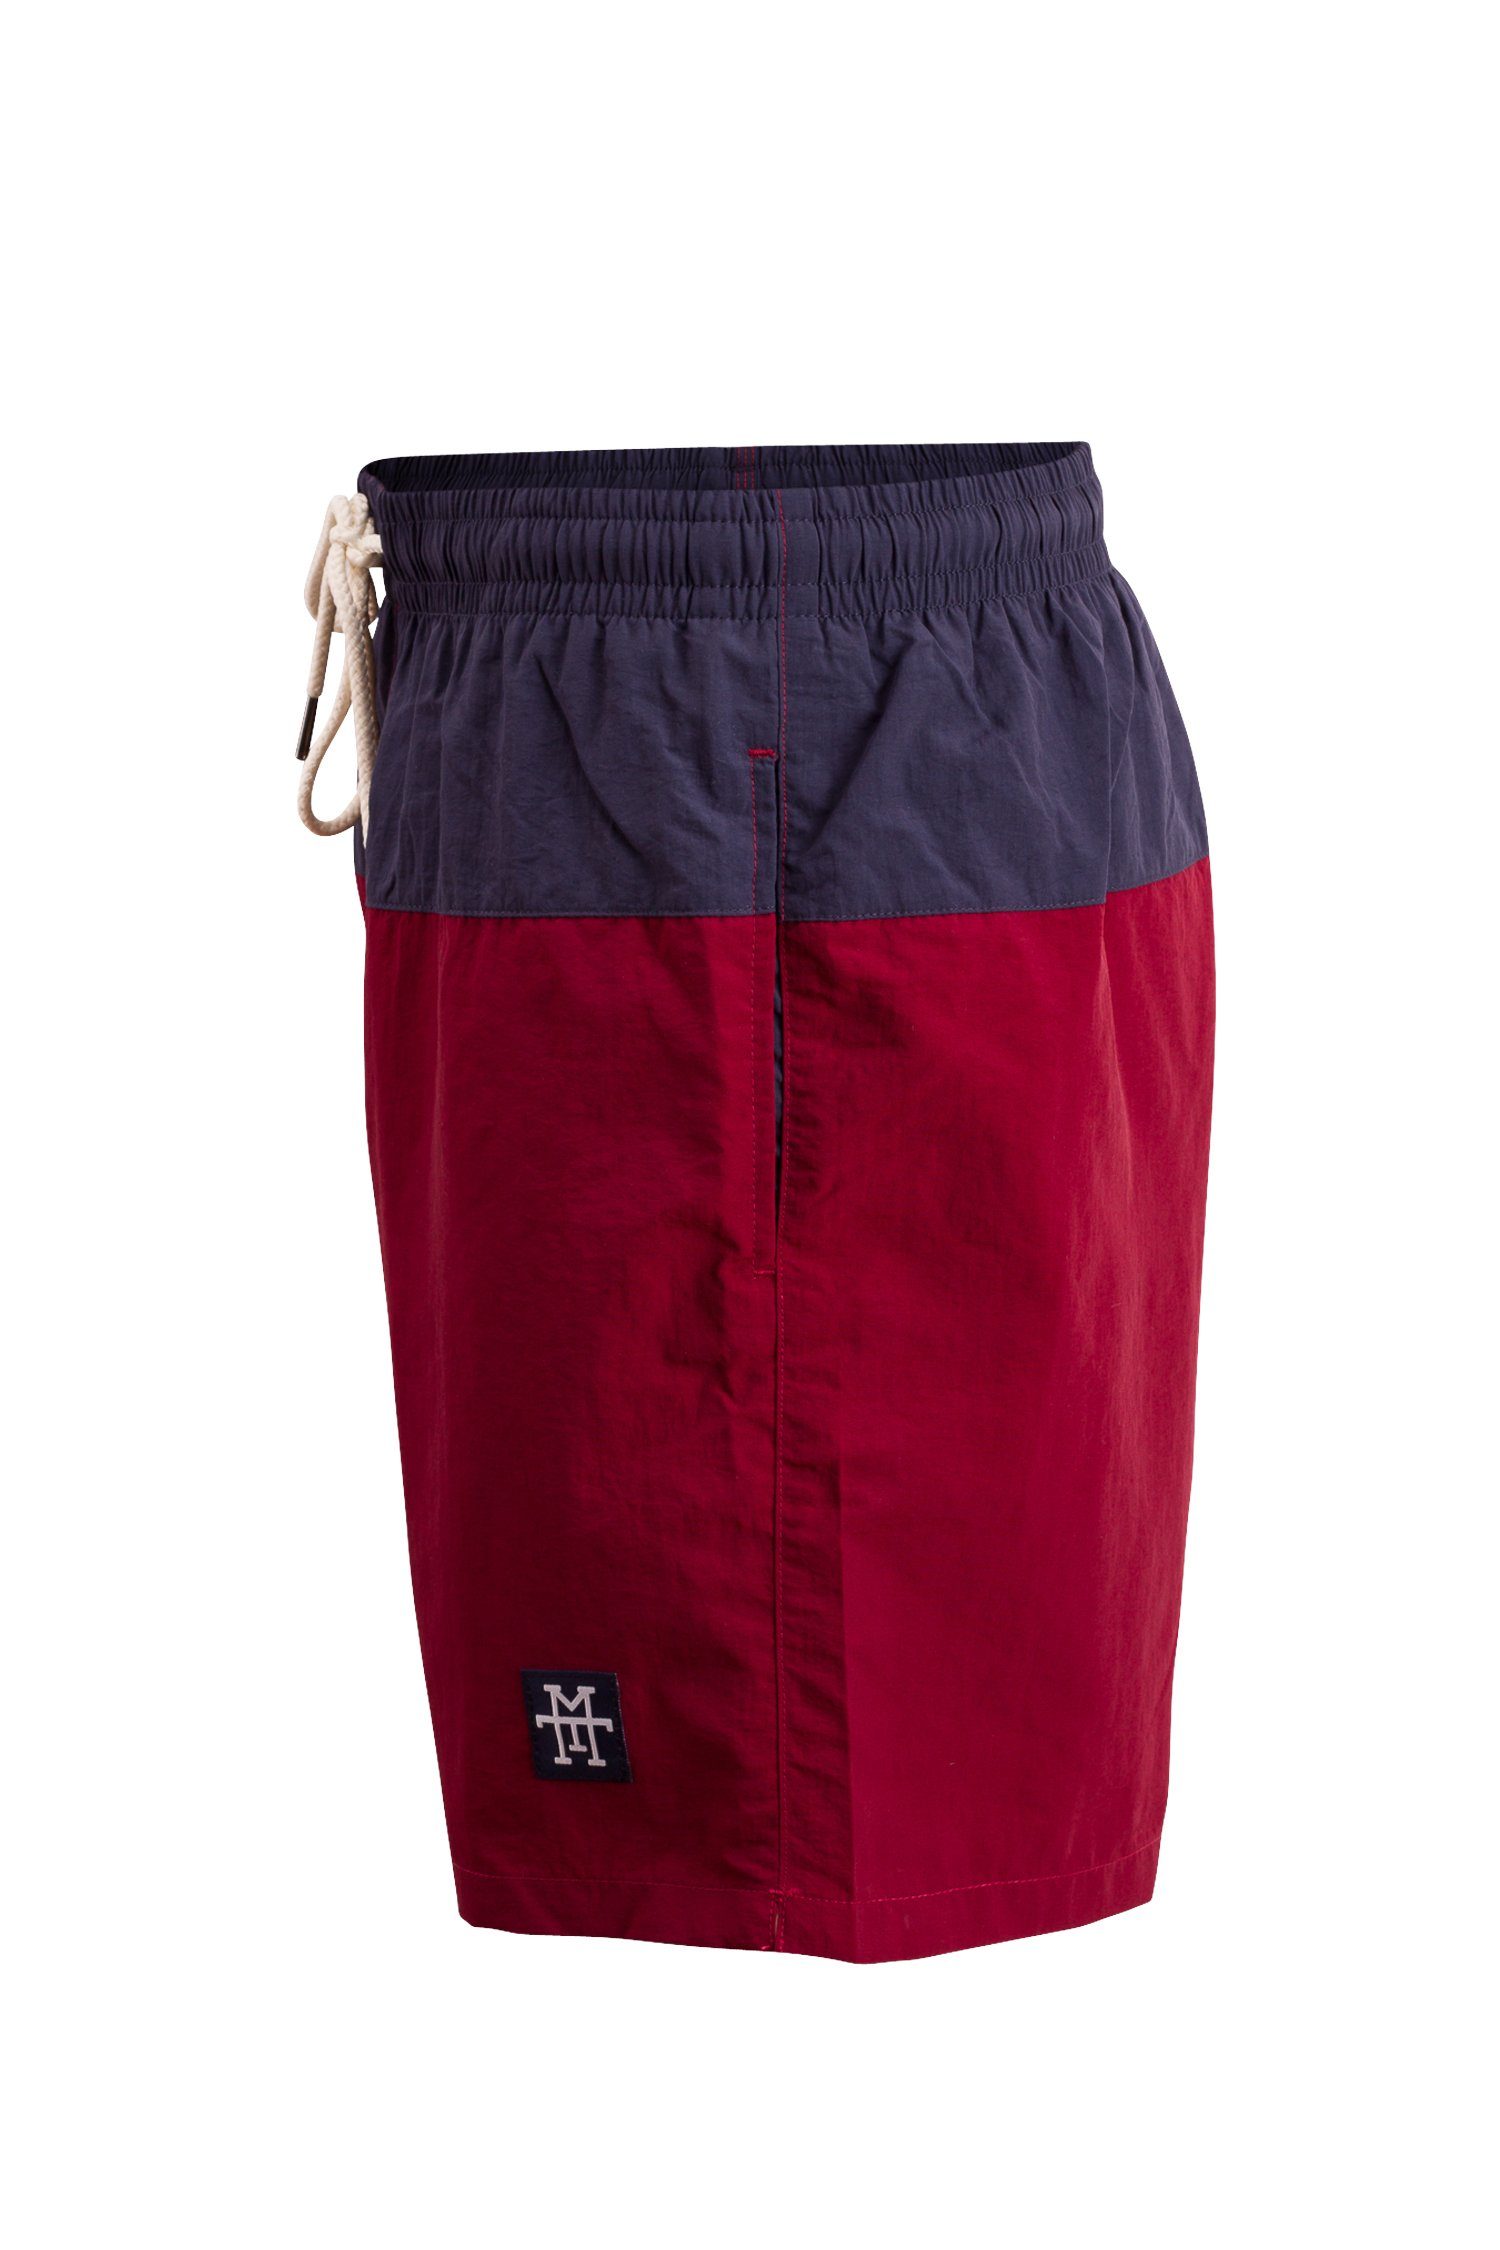 Badehosen Red/Navy Swim Manufaktur13 schnelltrocknend - Shorts Badeshorts